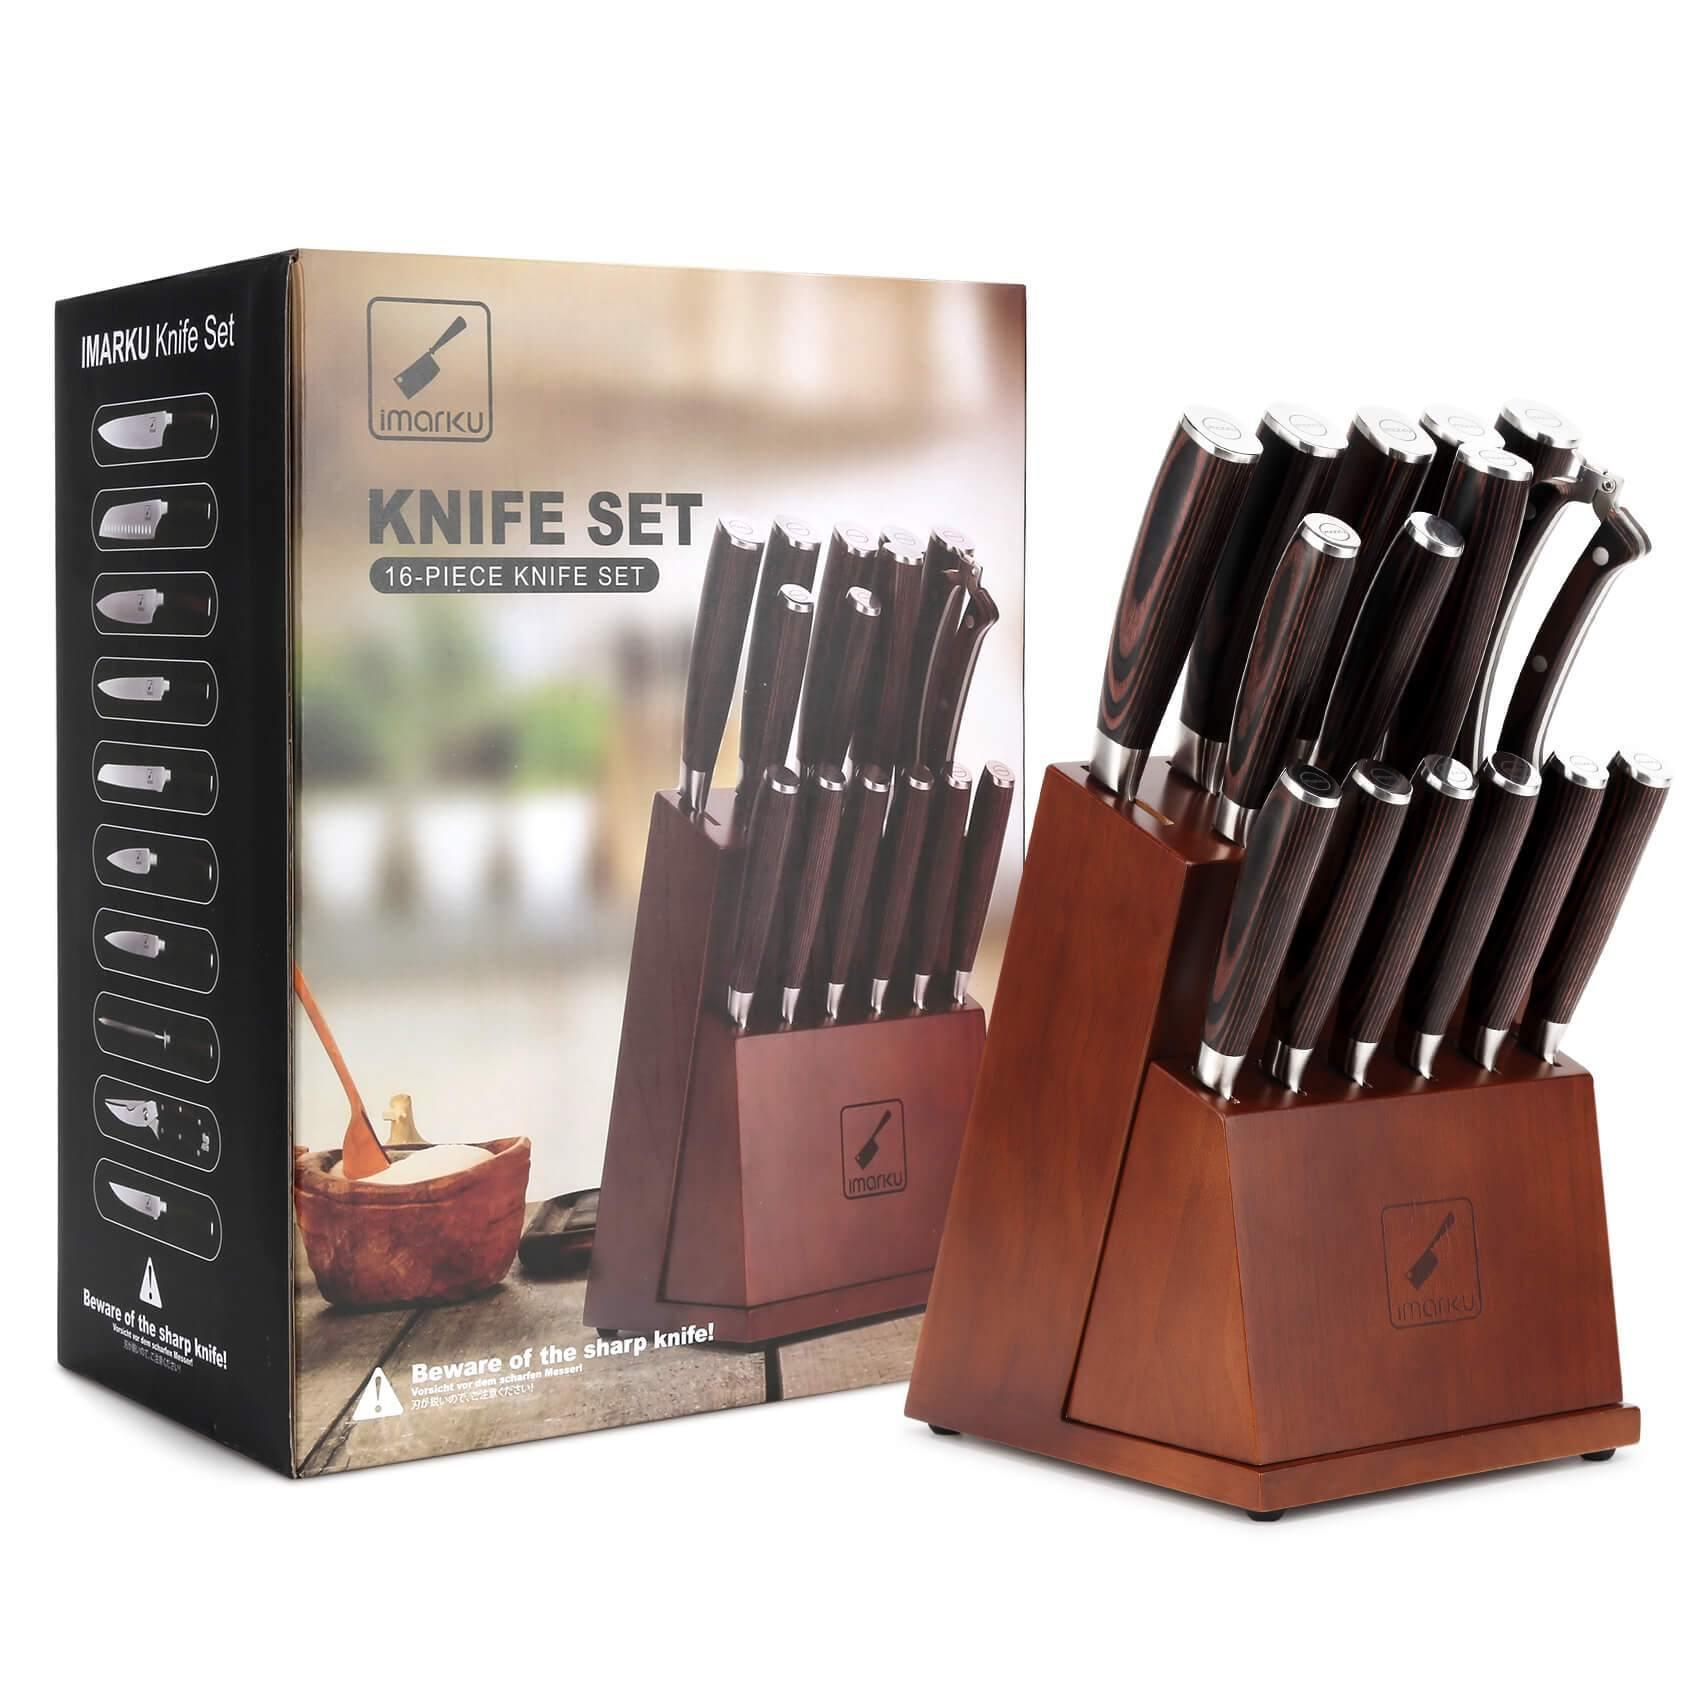 TUO Kitchen Knife Set - 6 pcs Professional Knives Set with Wooden Block -  German Stainless Steel Kitchen Knife Block Set - Ergonomic G10 Handle 